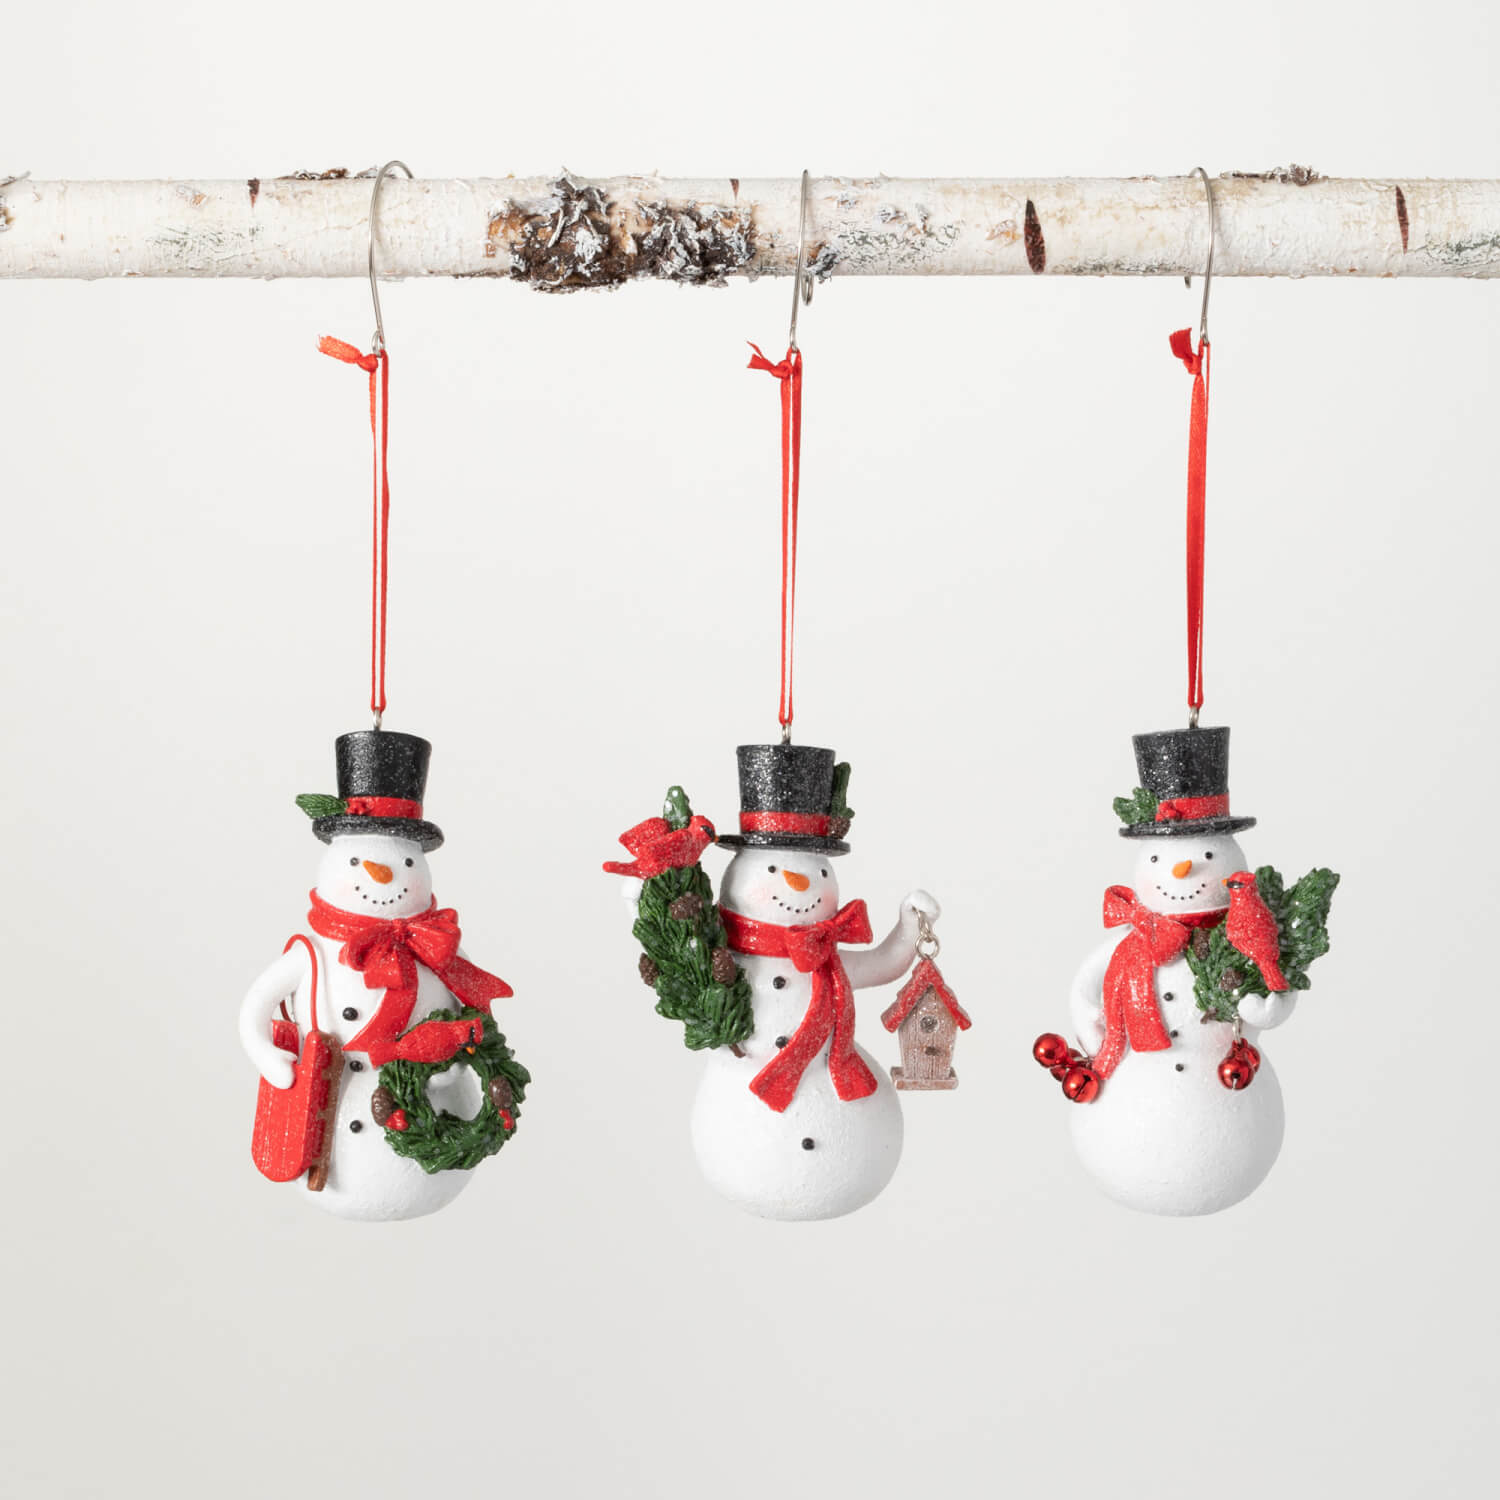 Details about   Christmas decorations Figurines Holiday Hatz Elf Santa Snowman miniatures 